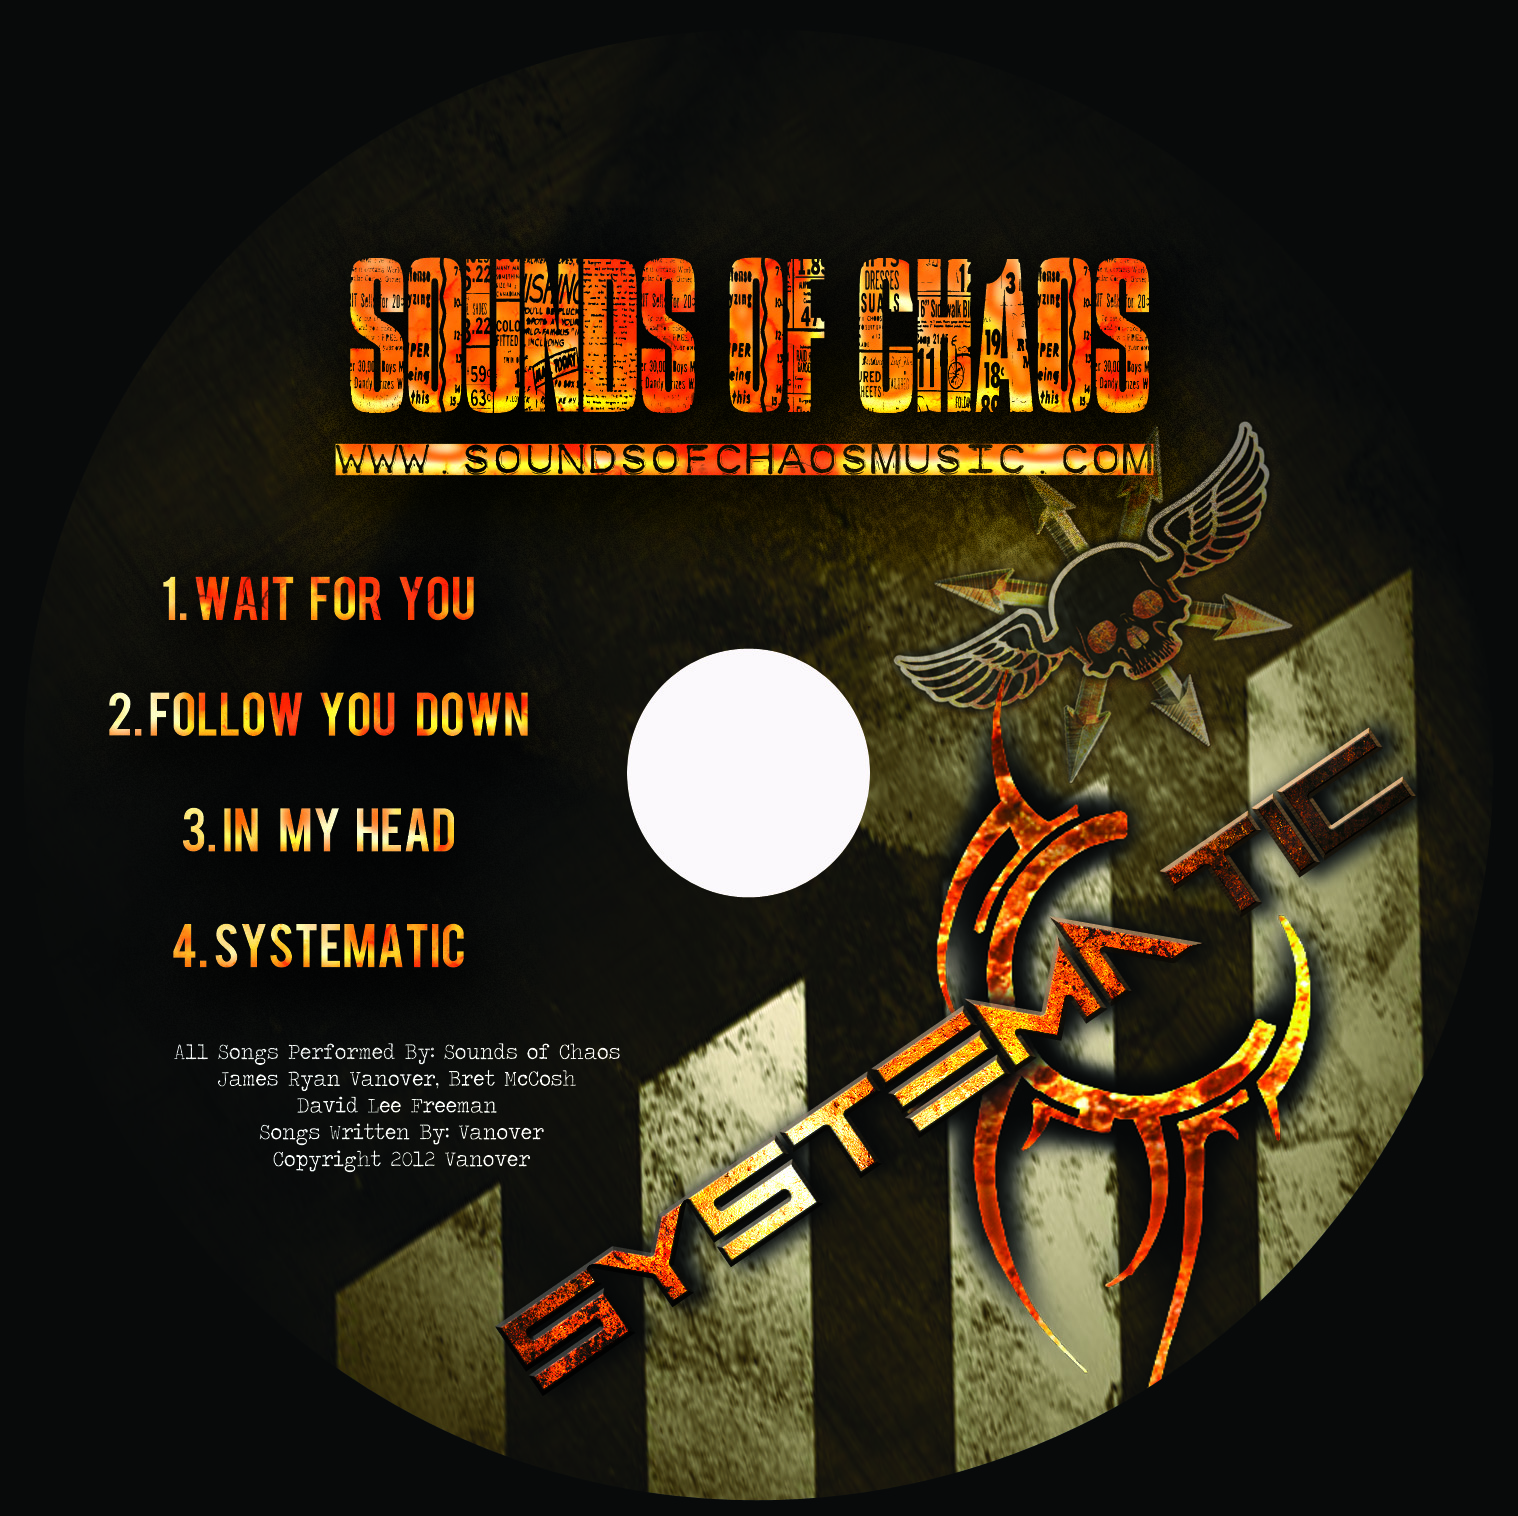 James Vanover Sounds of Chaos CD Art.jpg